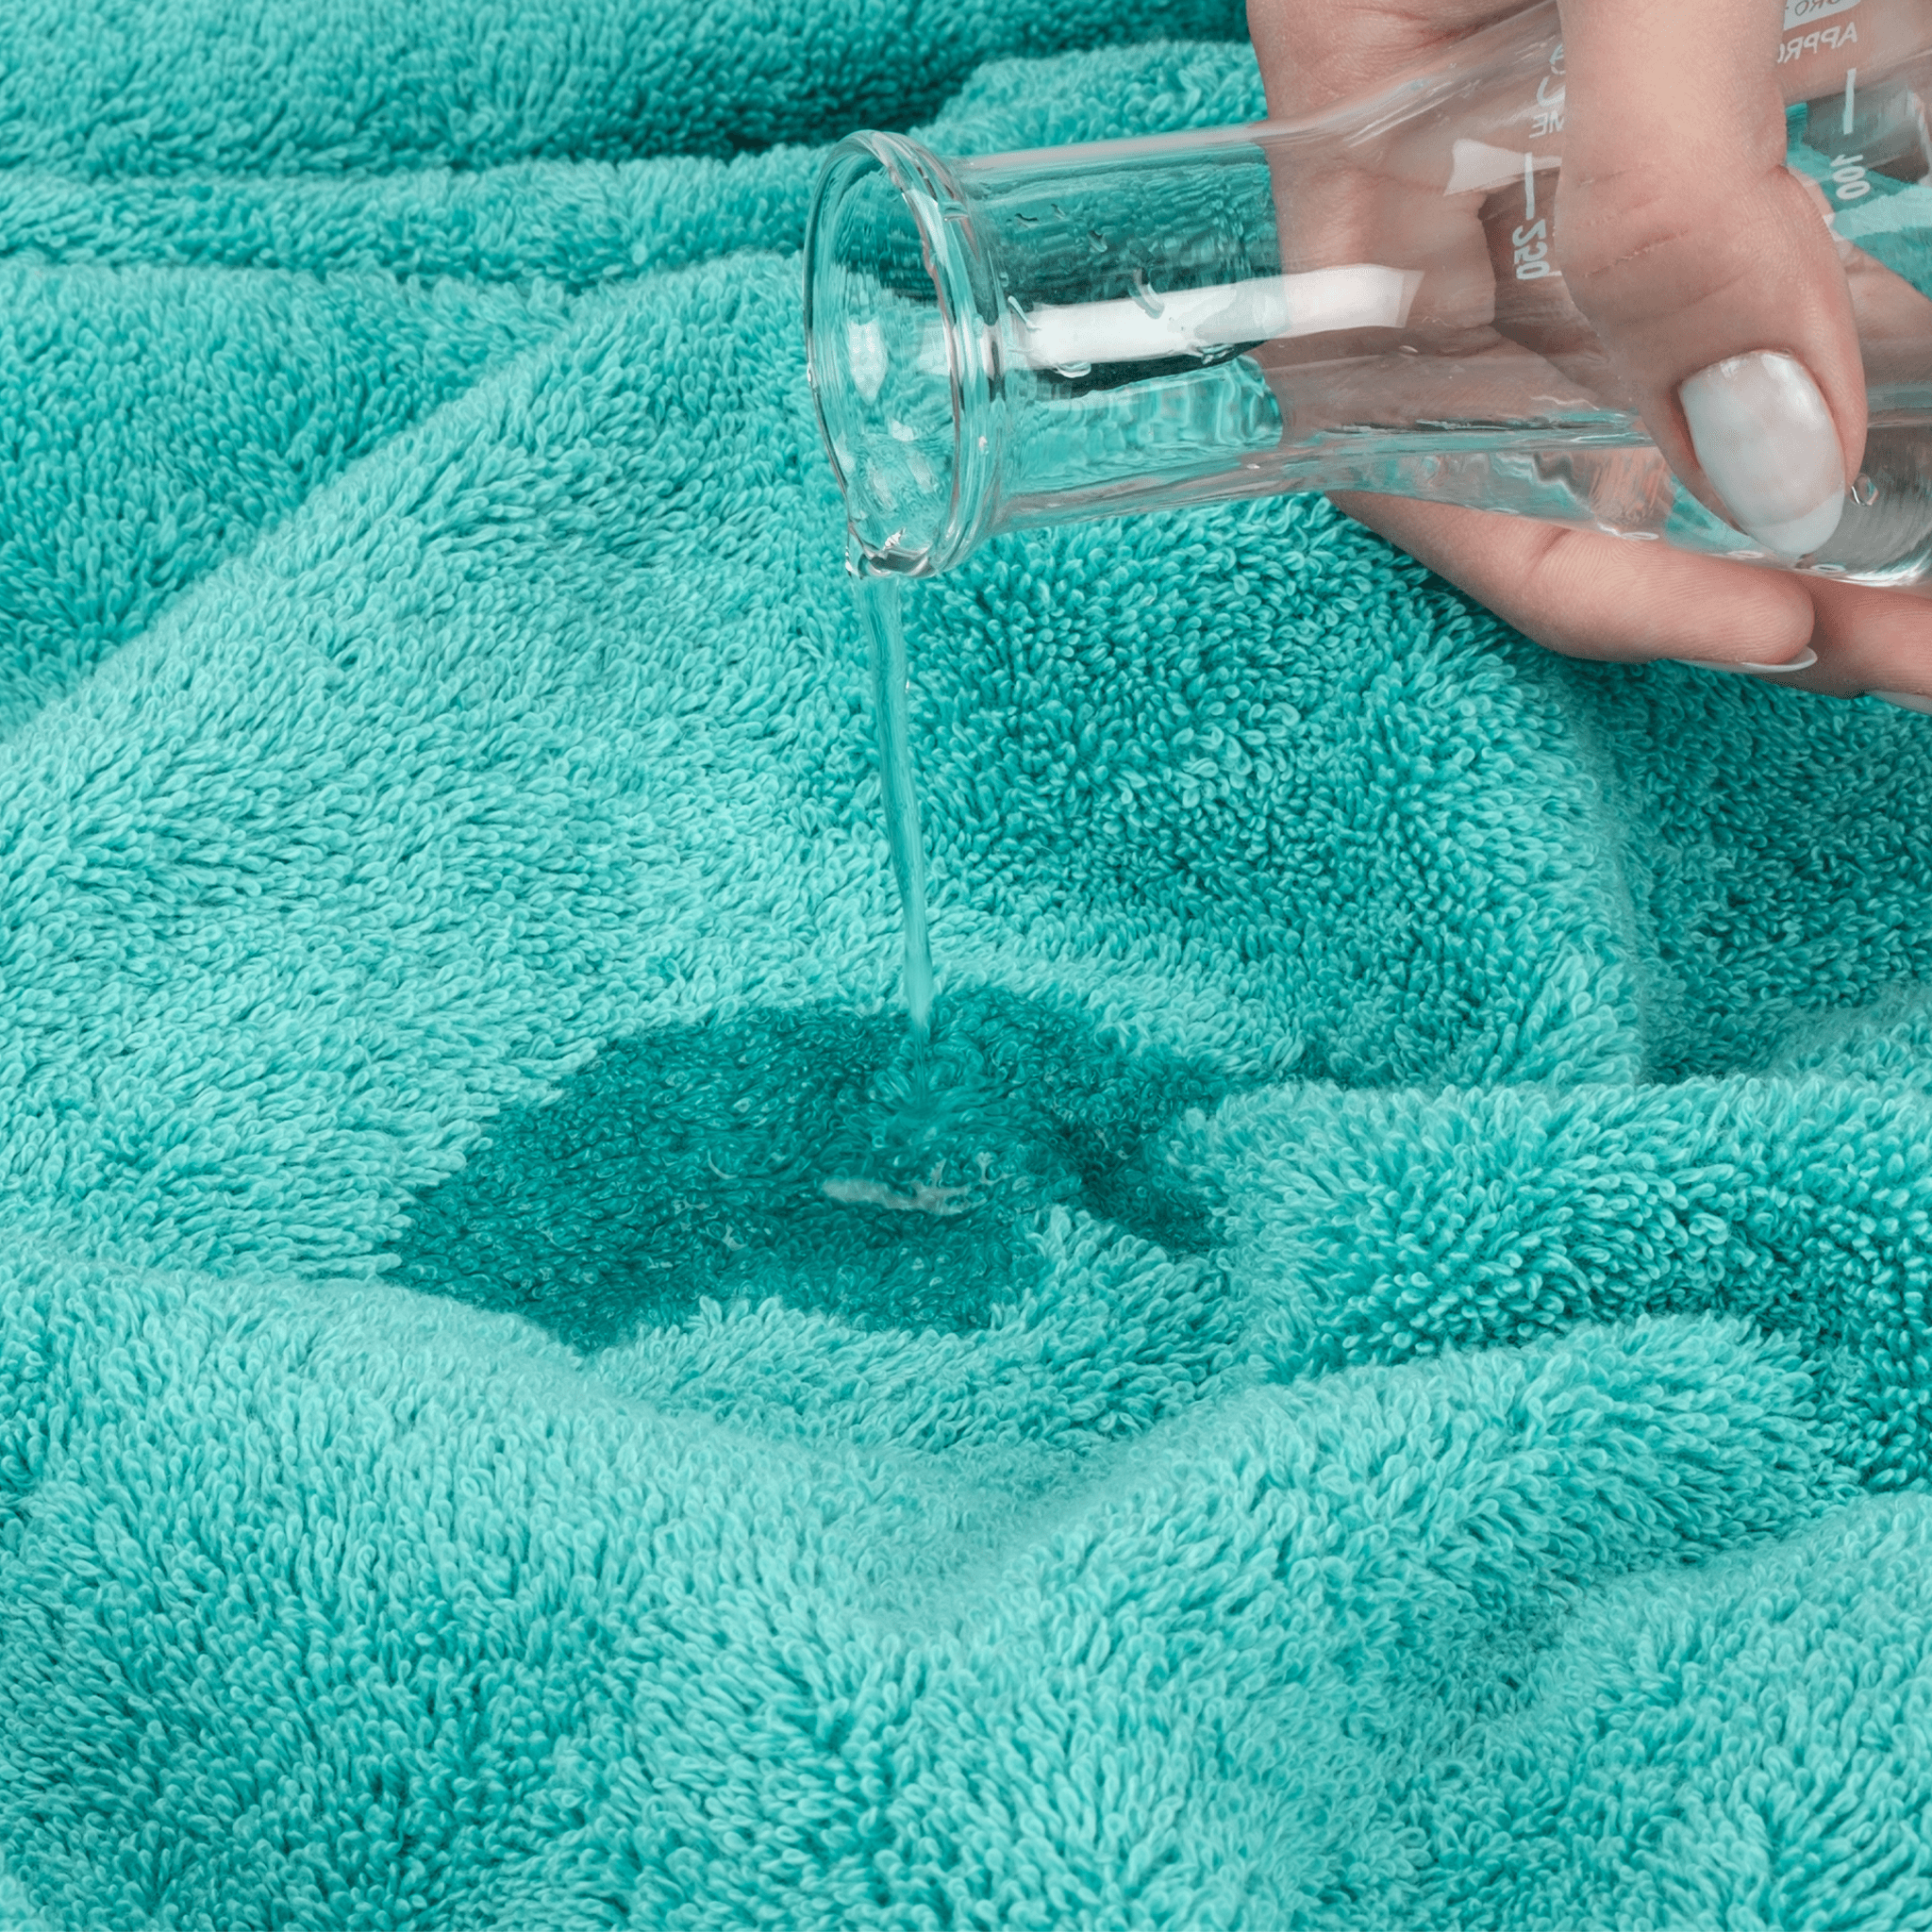 American Soft Linen 6 Piece Turkish Cotton Bath Towel Set - On Sale - Bed  Bath & Beyond - 33151109